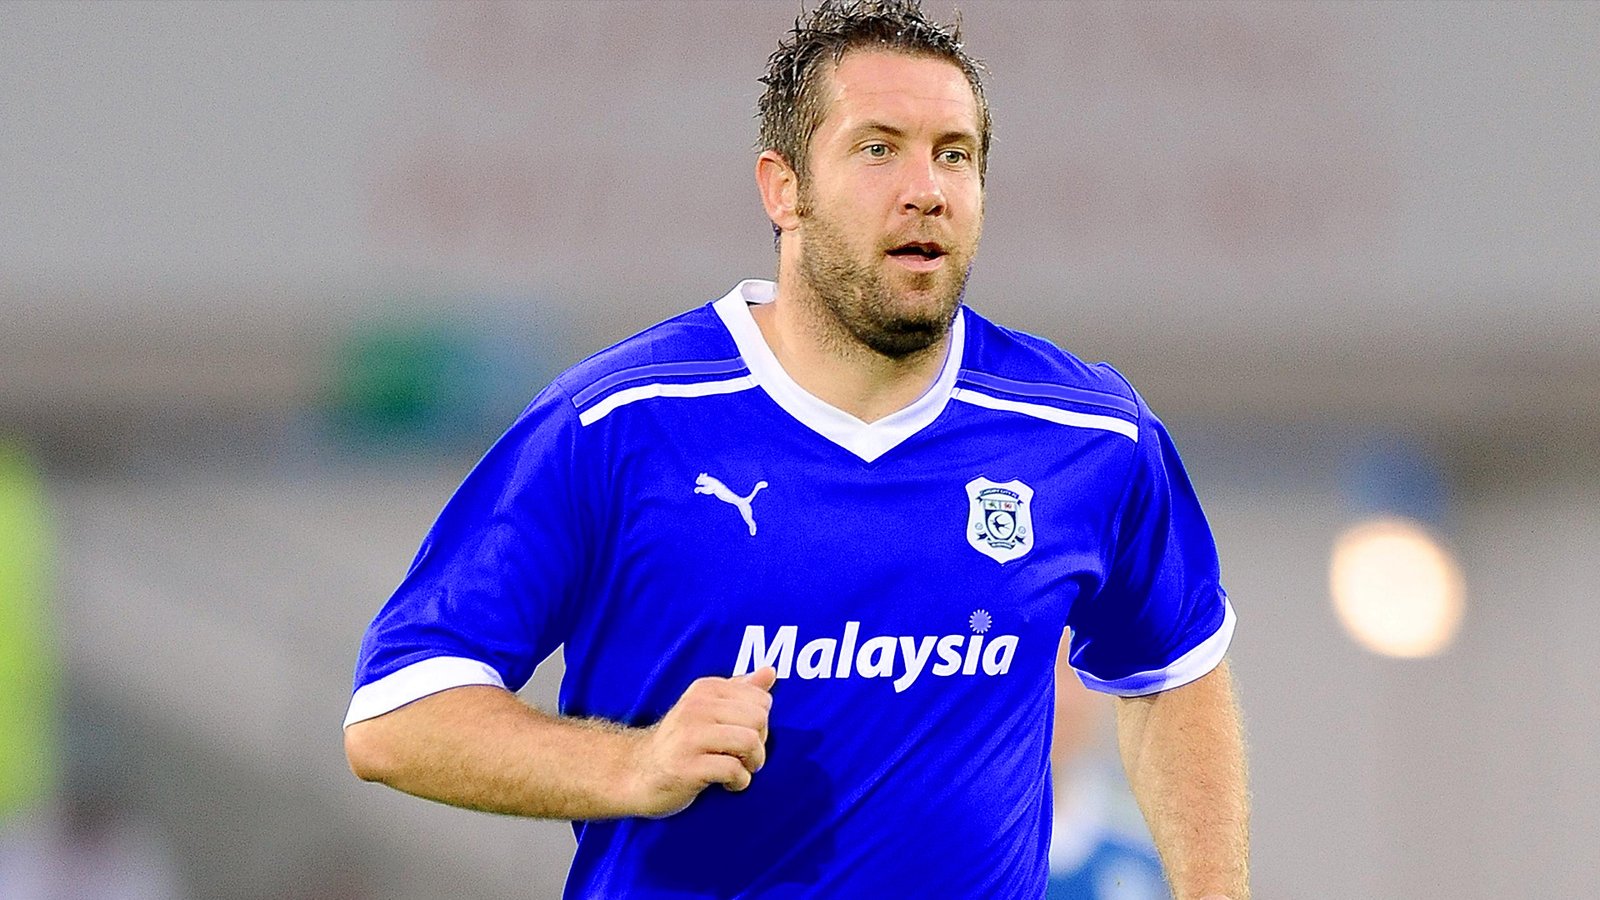 Cardiff City's Jon Parkin 'sorry for Twitter outburst' - BBC Sport